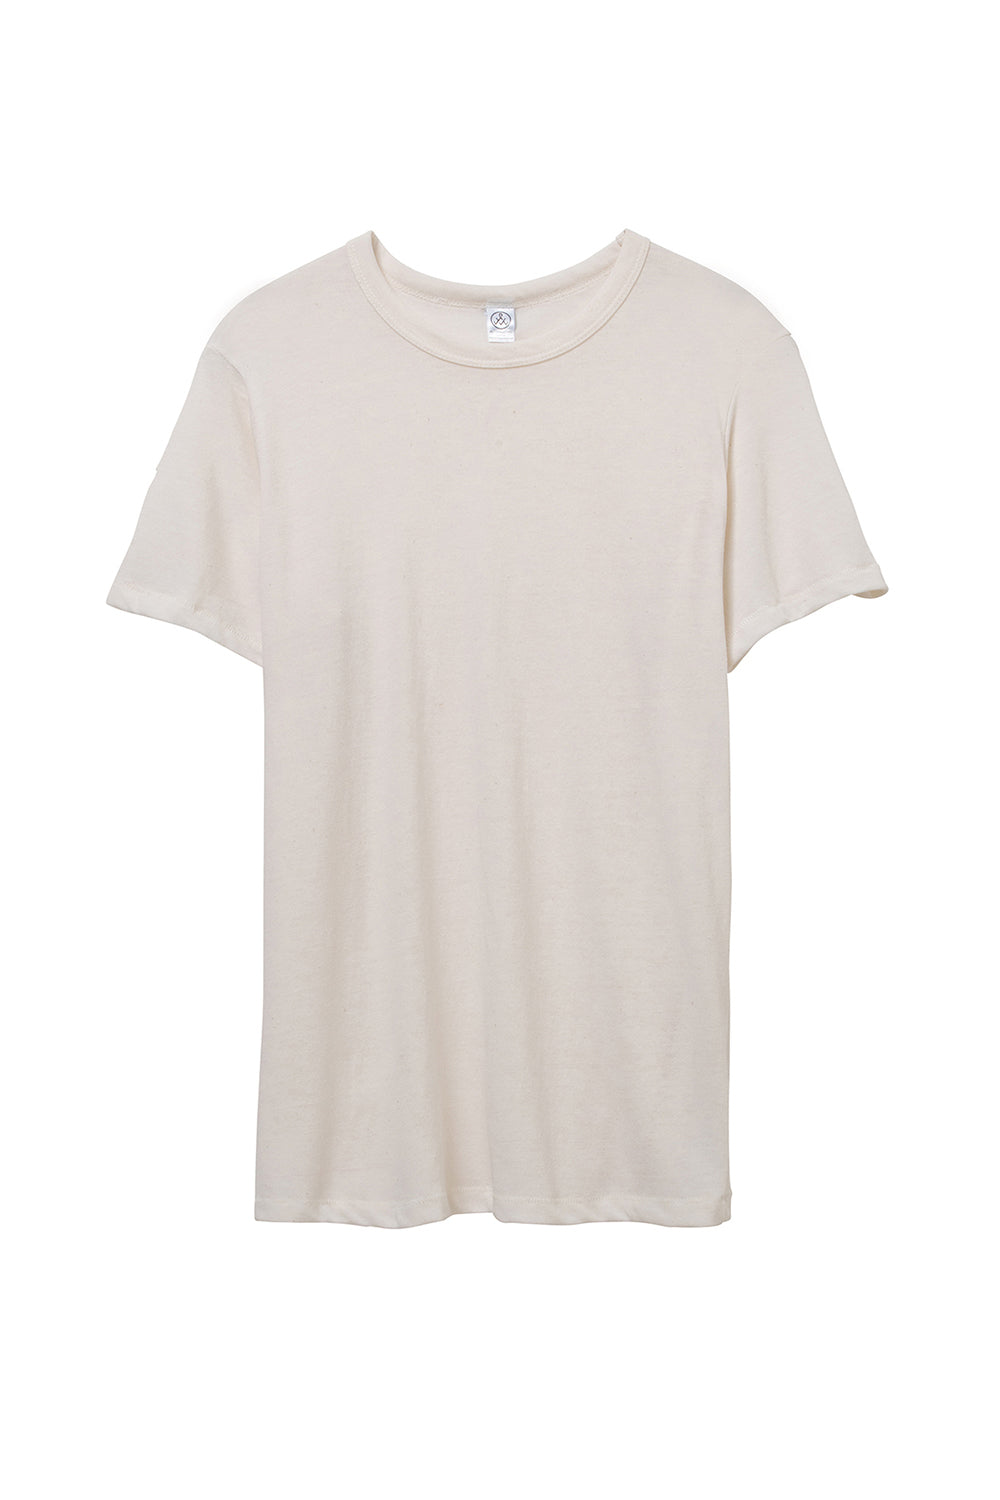 Alternative AA1973/01973EA/1973 Mens Eco Jersey Short Sleeve Crewneck T-Shirt Eco Ivory Flat Front